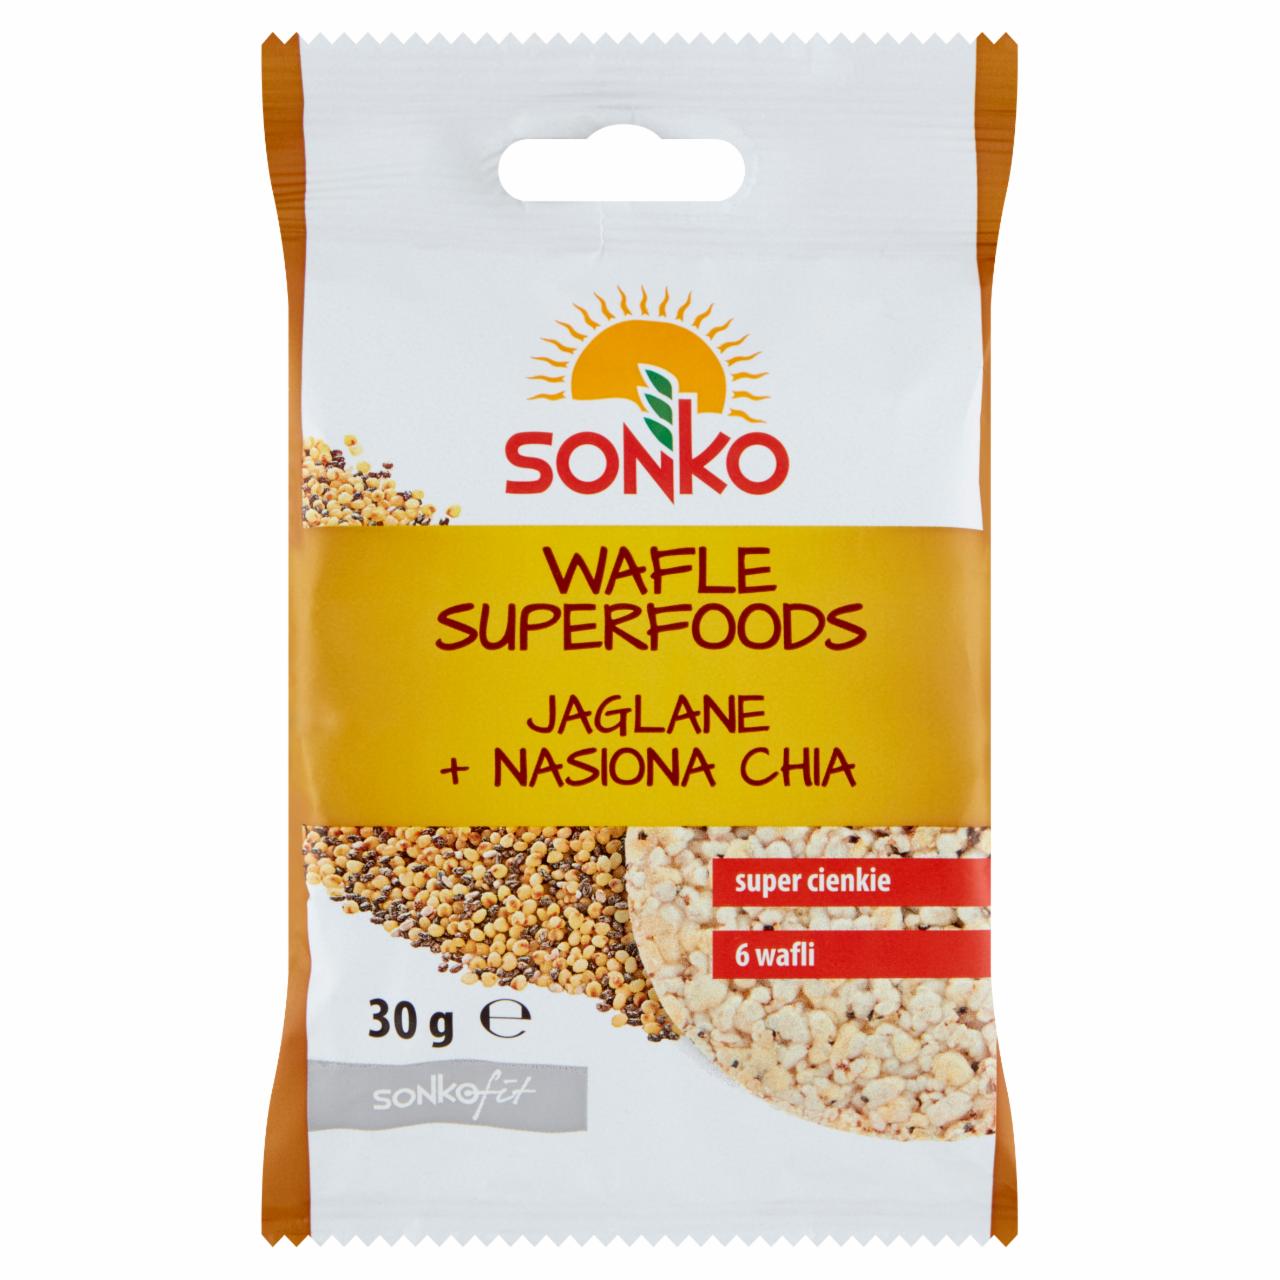 Zdjęcia - Sonko Wafle superfoods jaglane + nasiona chia 30 g